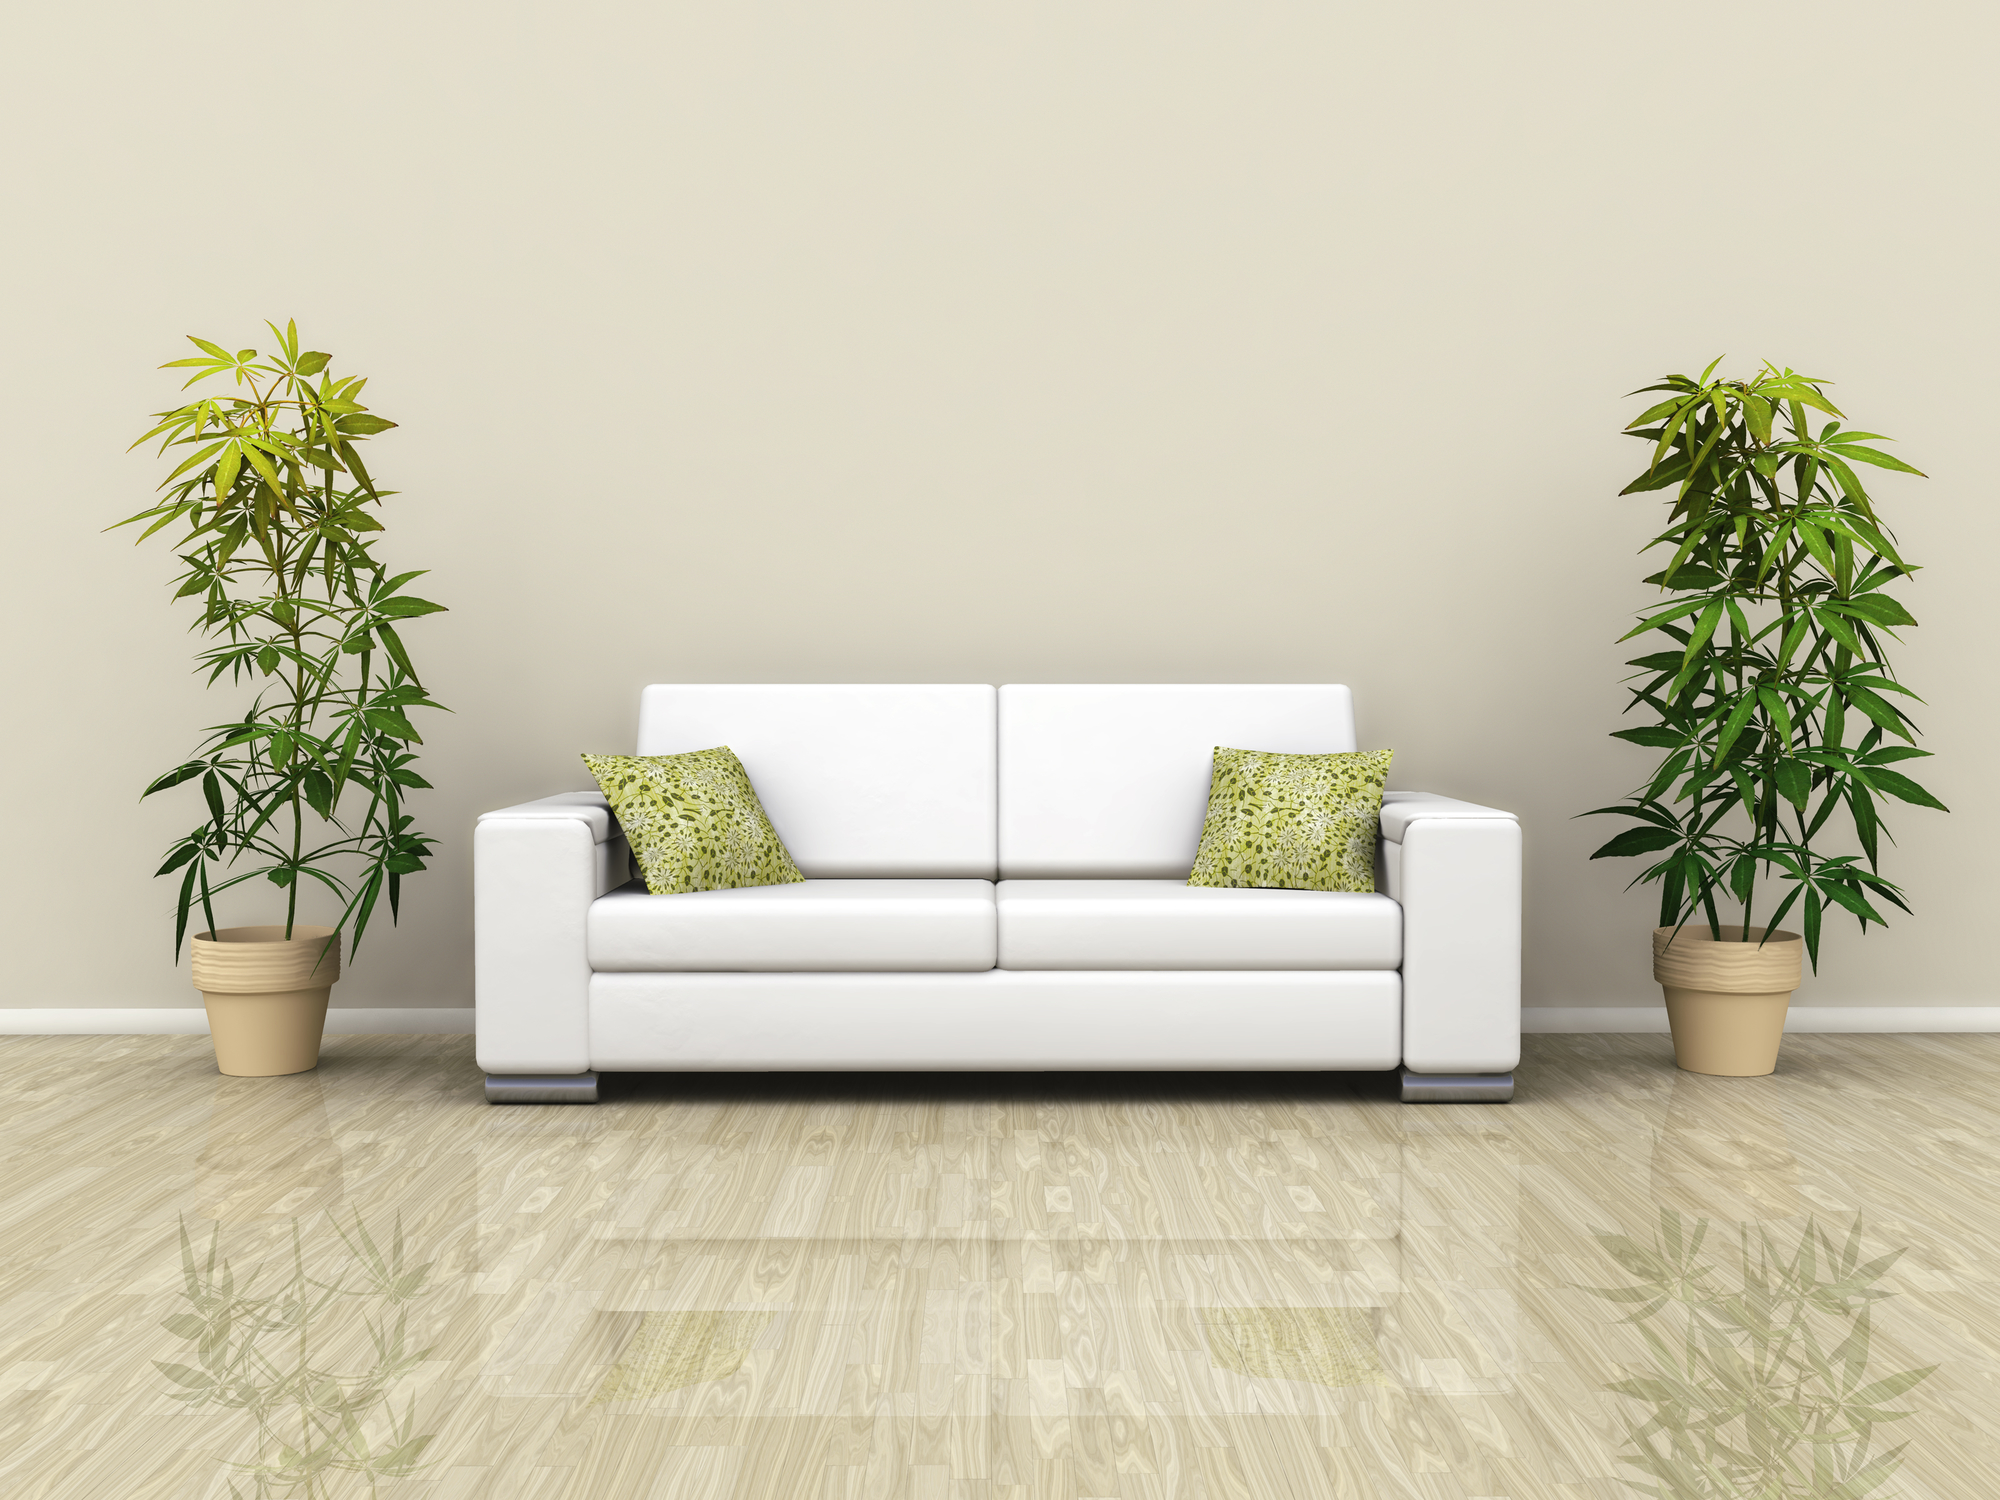 sofa-plants.jpg